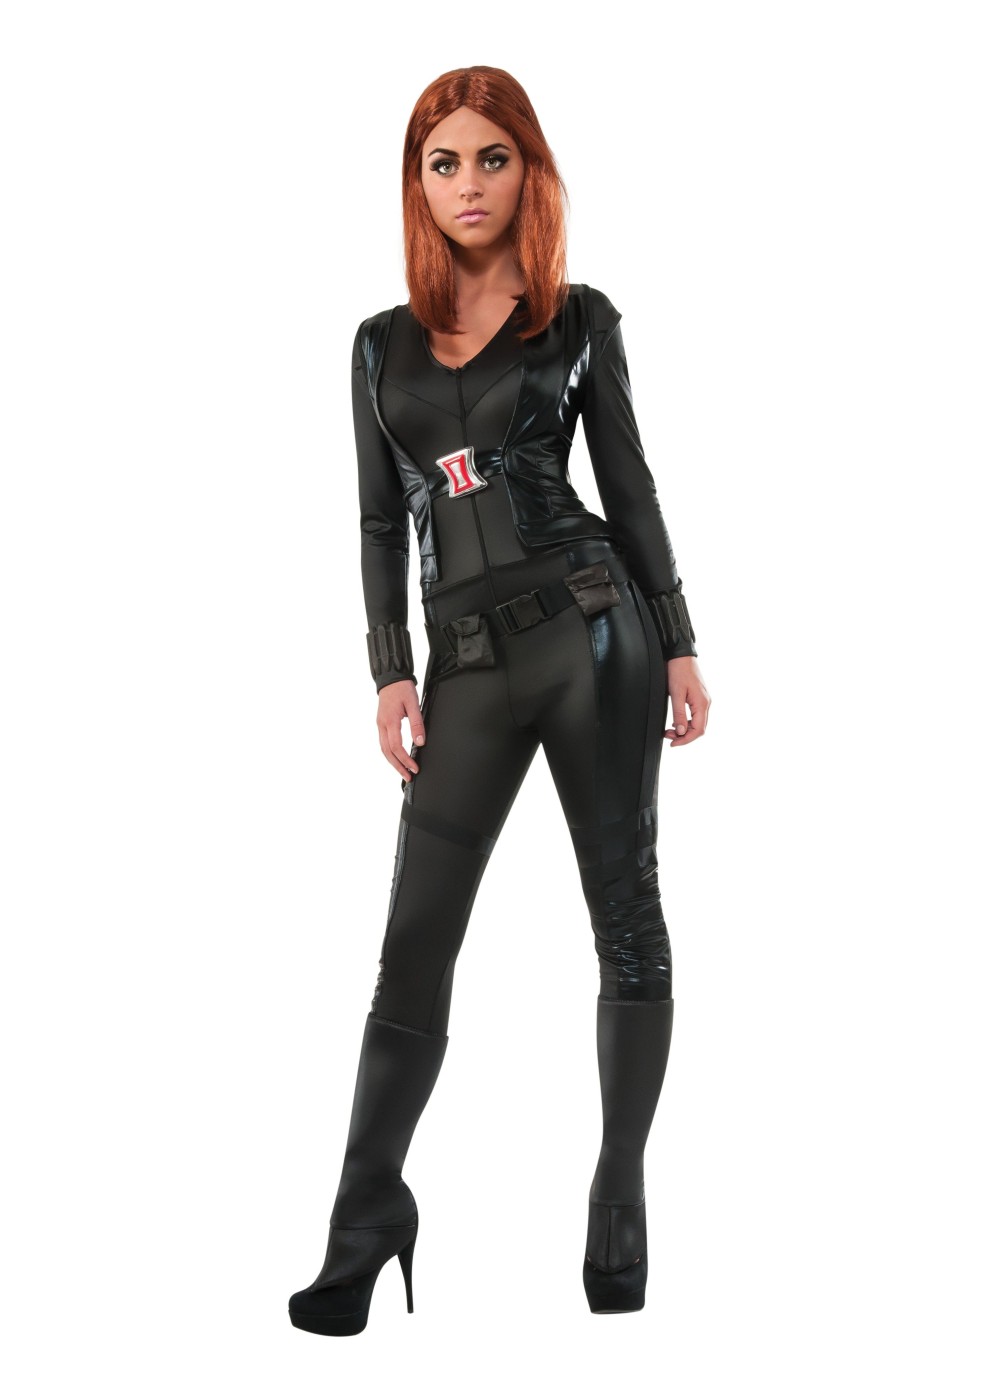 Black Widow Women's Costume - Women Costume